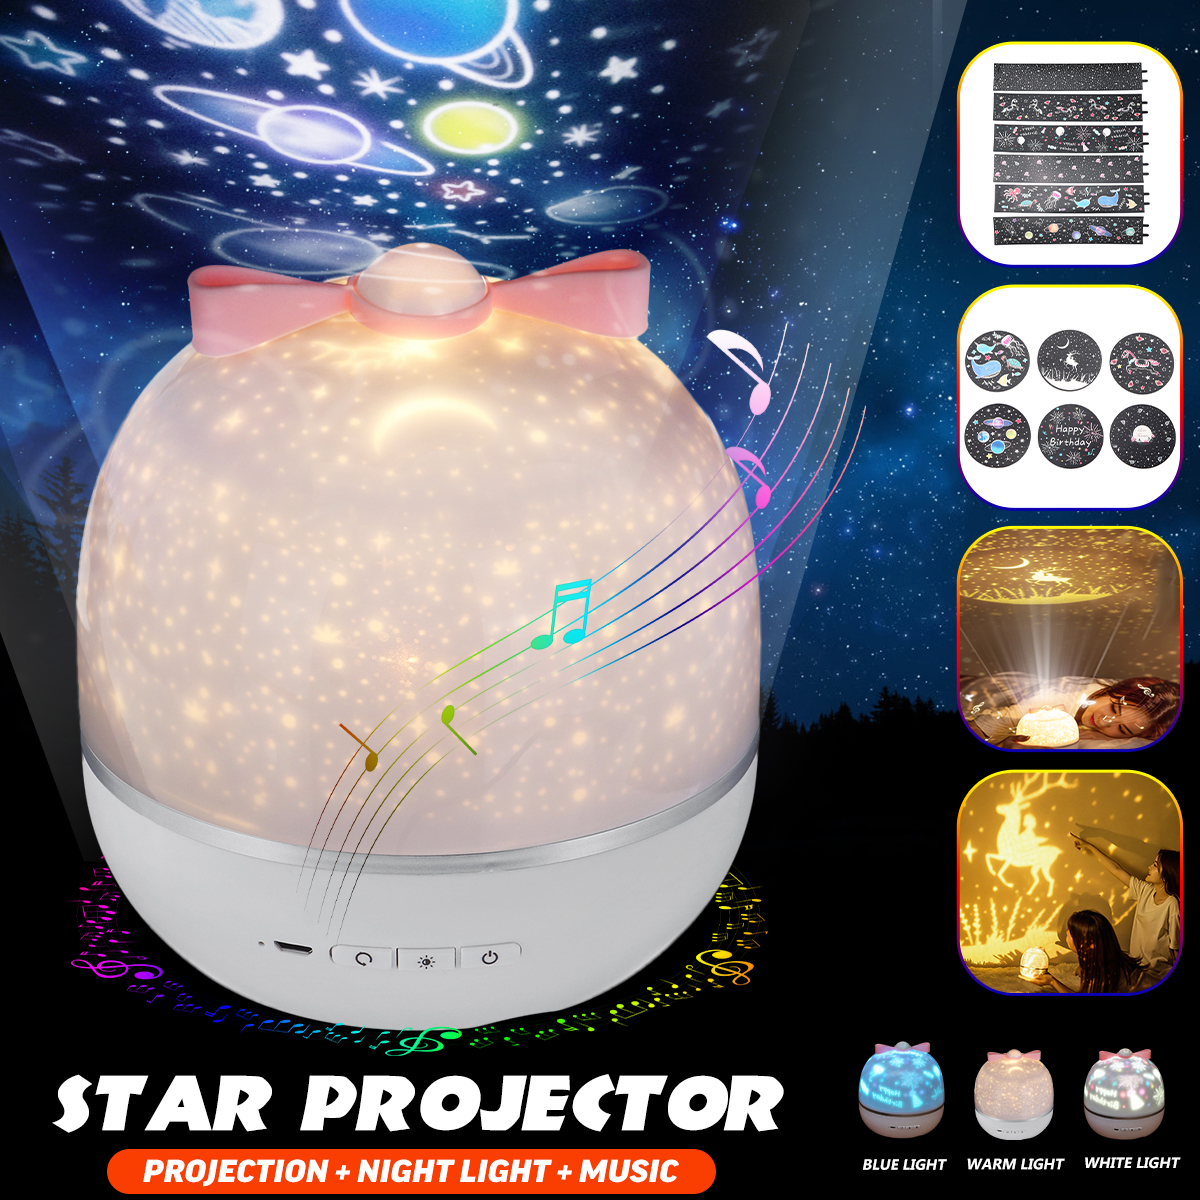 USB-LED-Star-Projection-Lamp-Music-Colorful-Night-Light-Garden-Birthday-Christmas-Gift-1707791-1